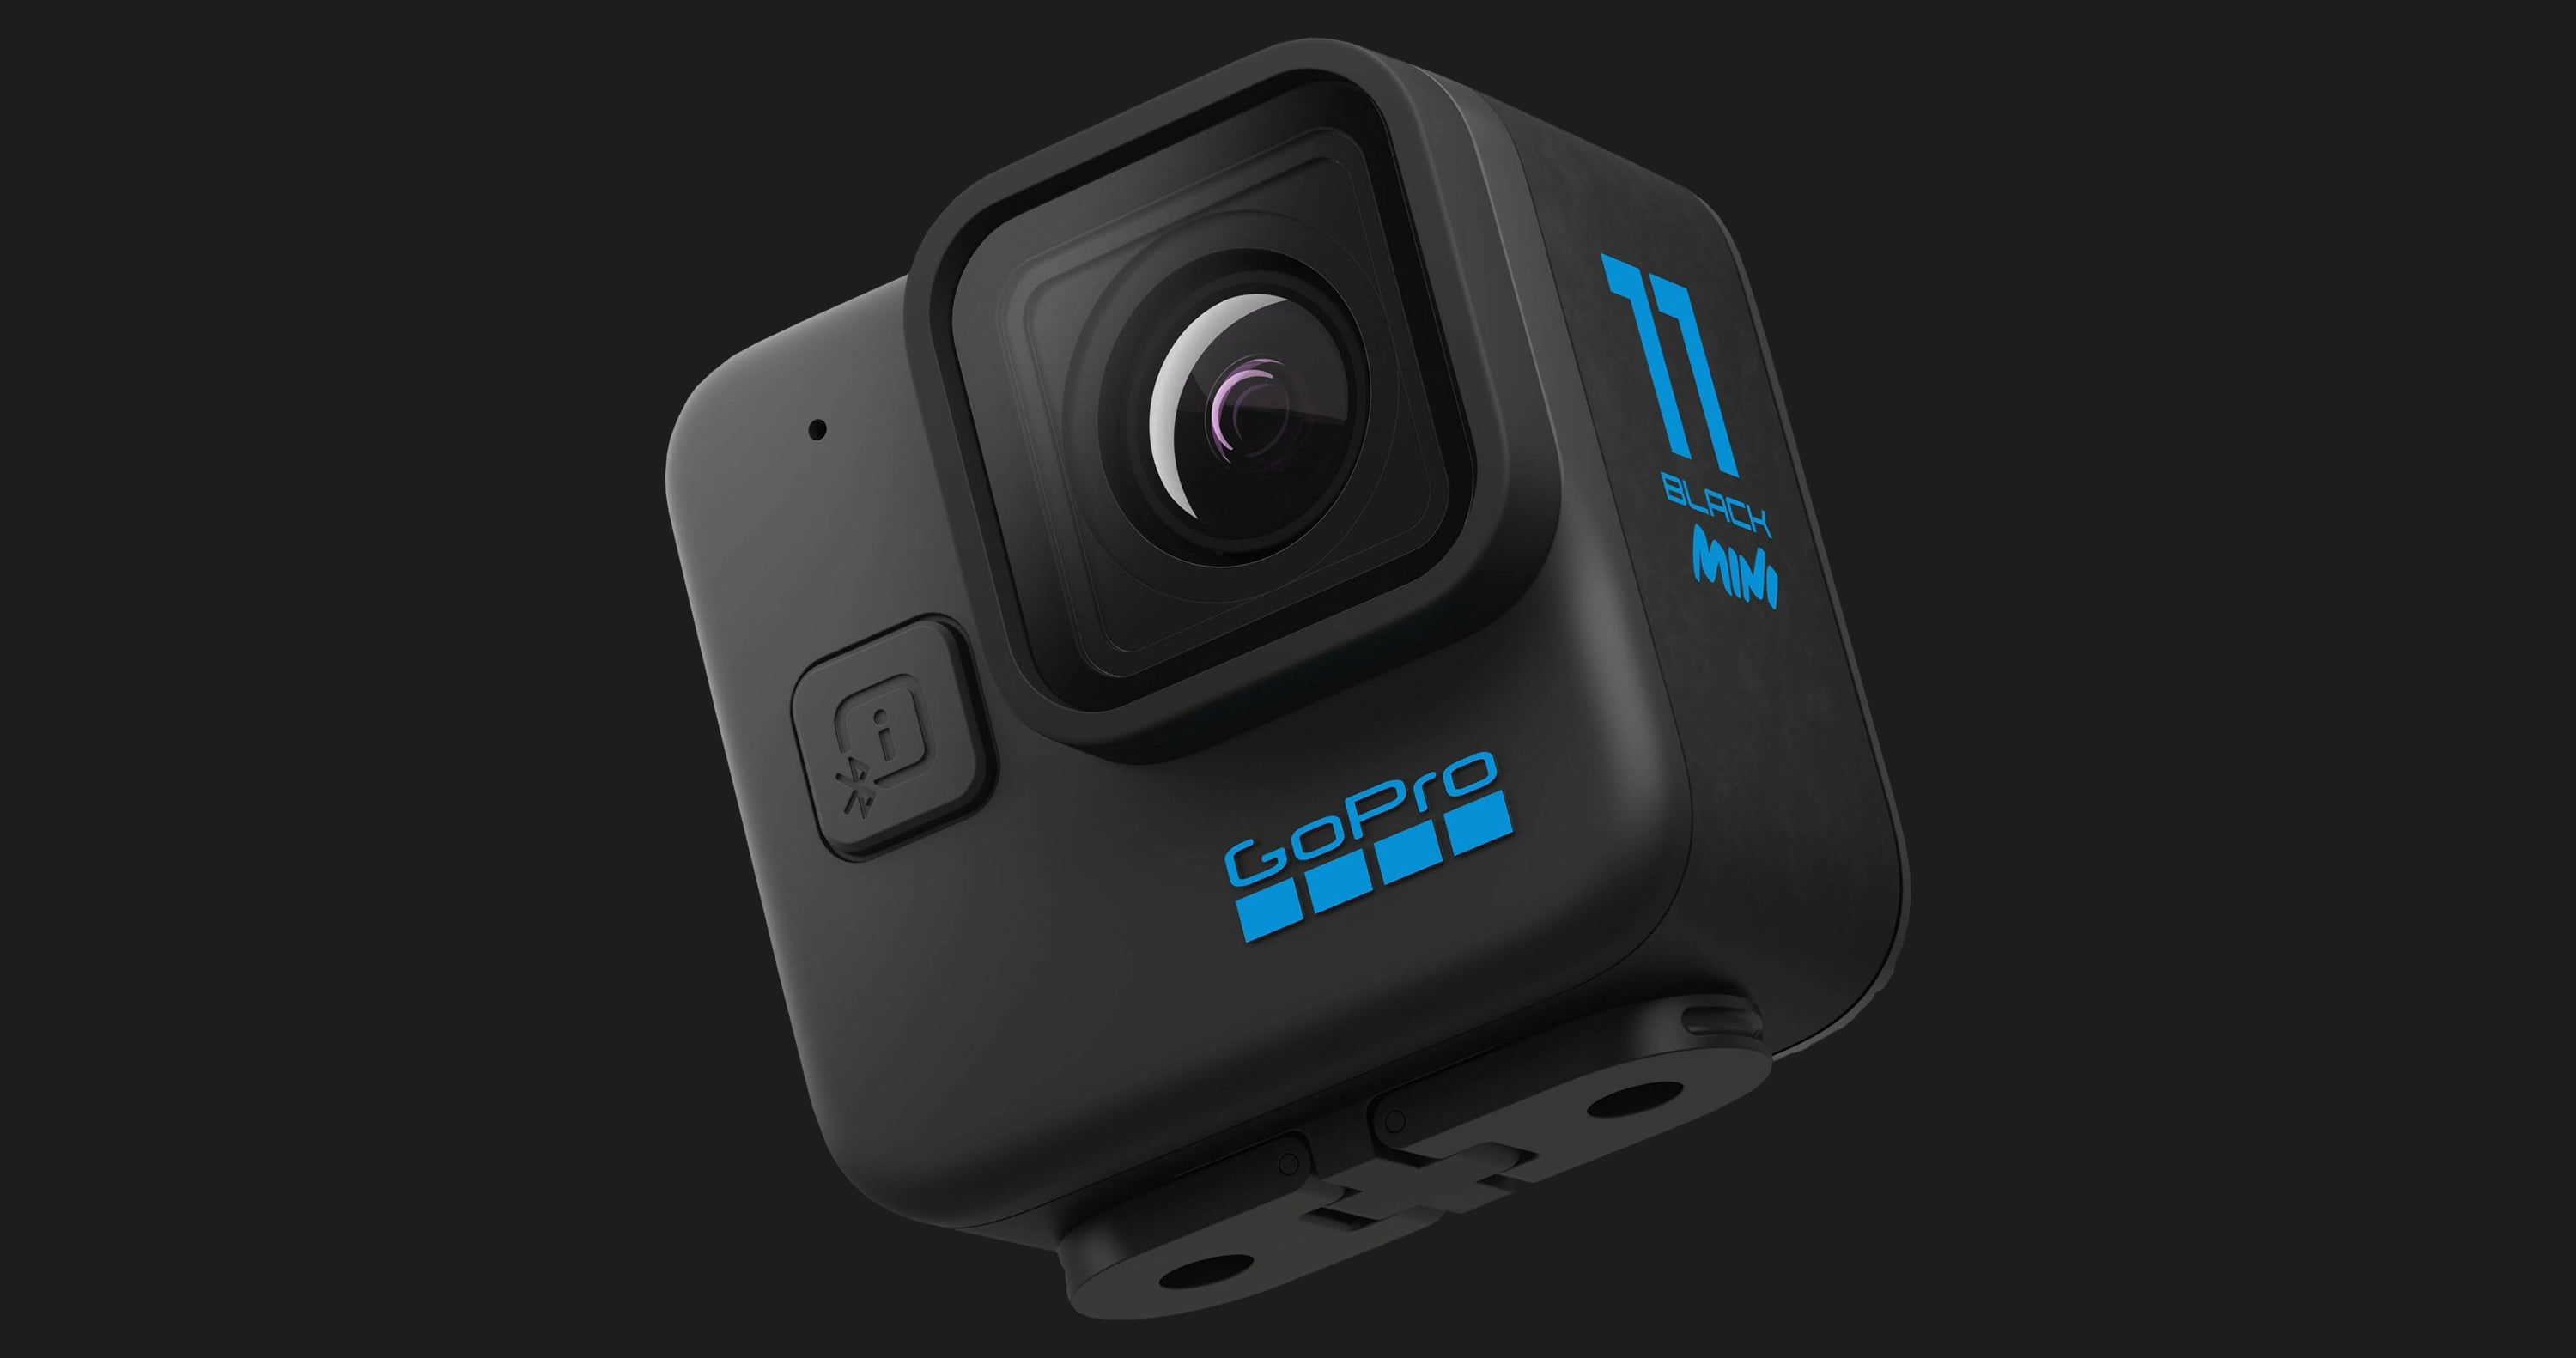 Екшн-камера GoPro Hero 11 Black Mini